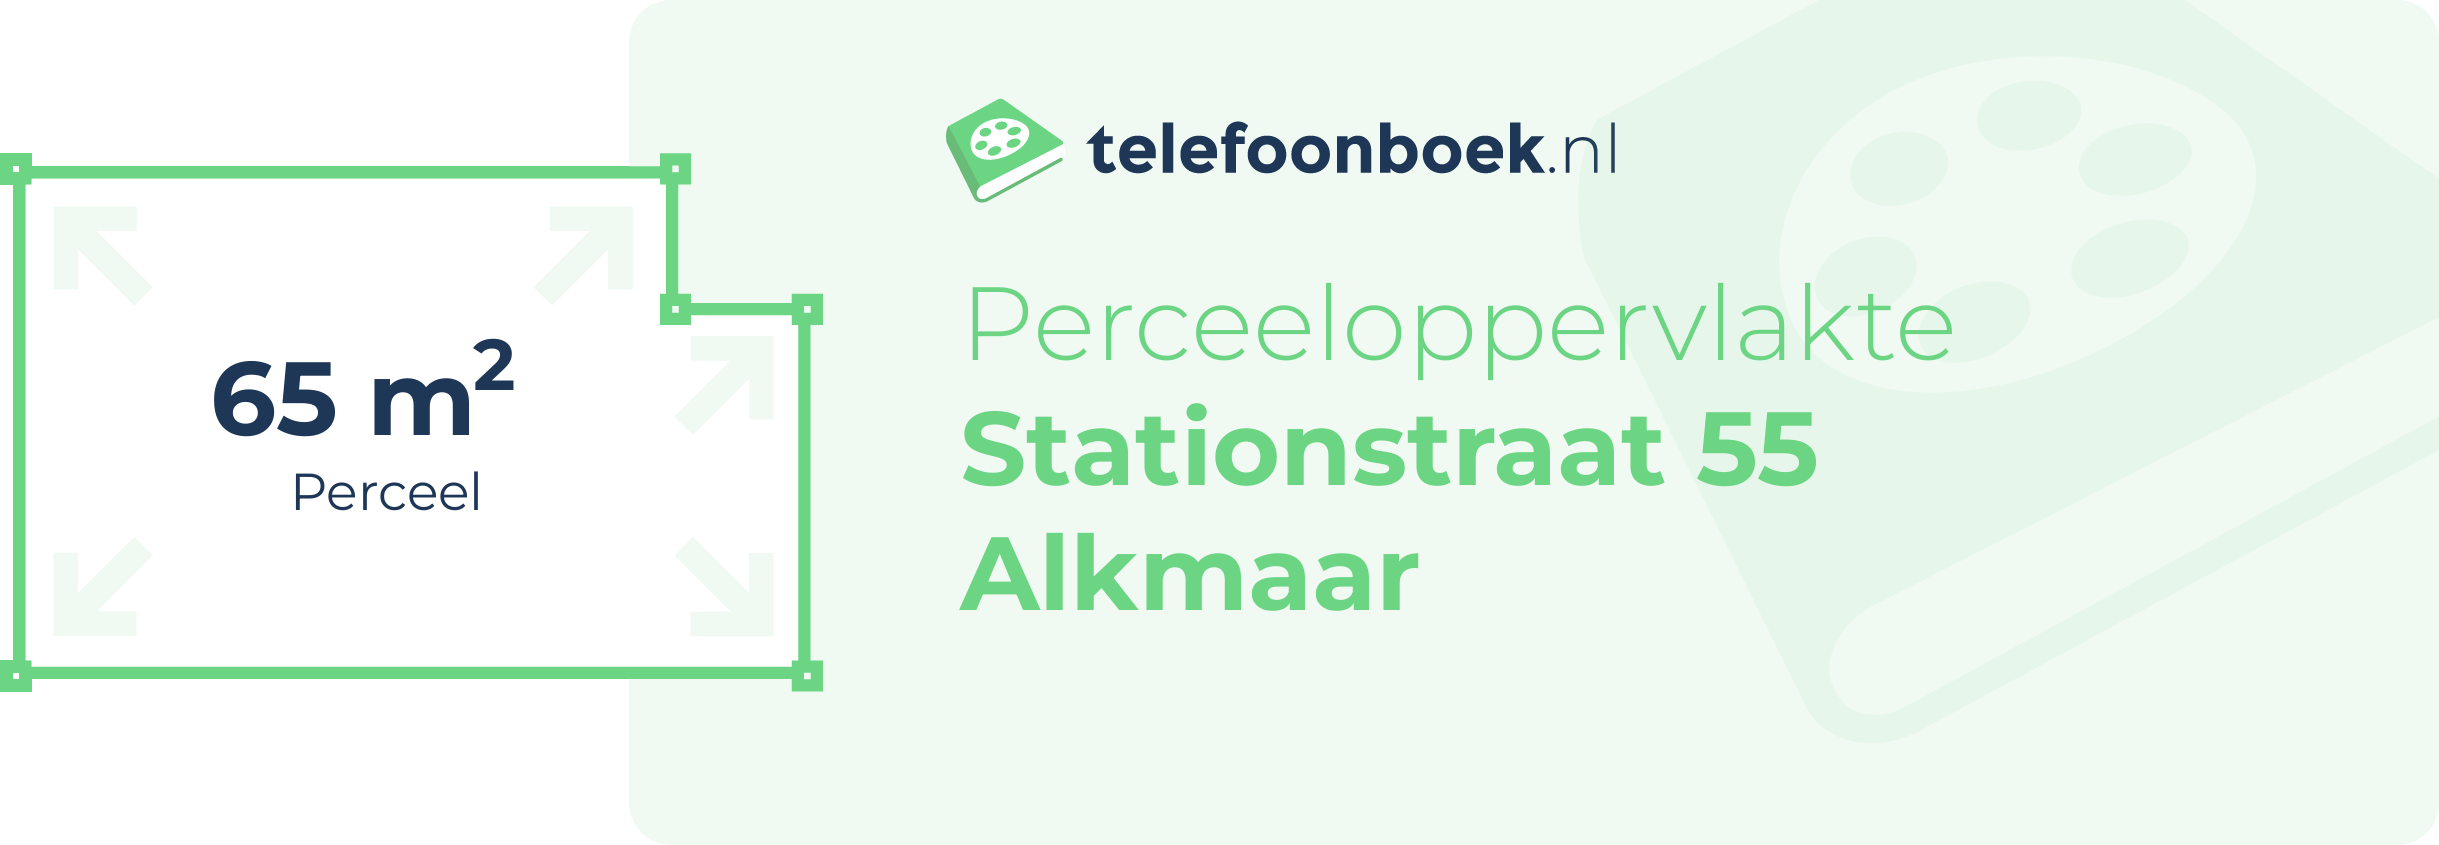 Perceeloppervlakte Stationstraat 55 Alkmaar